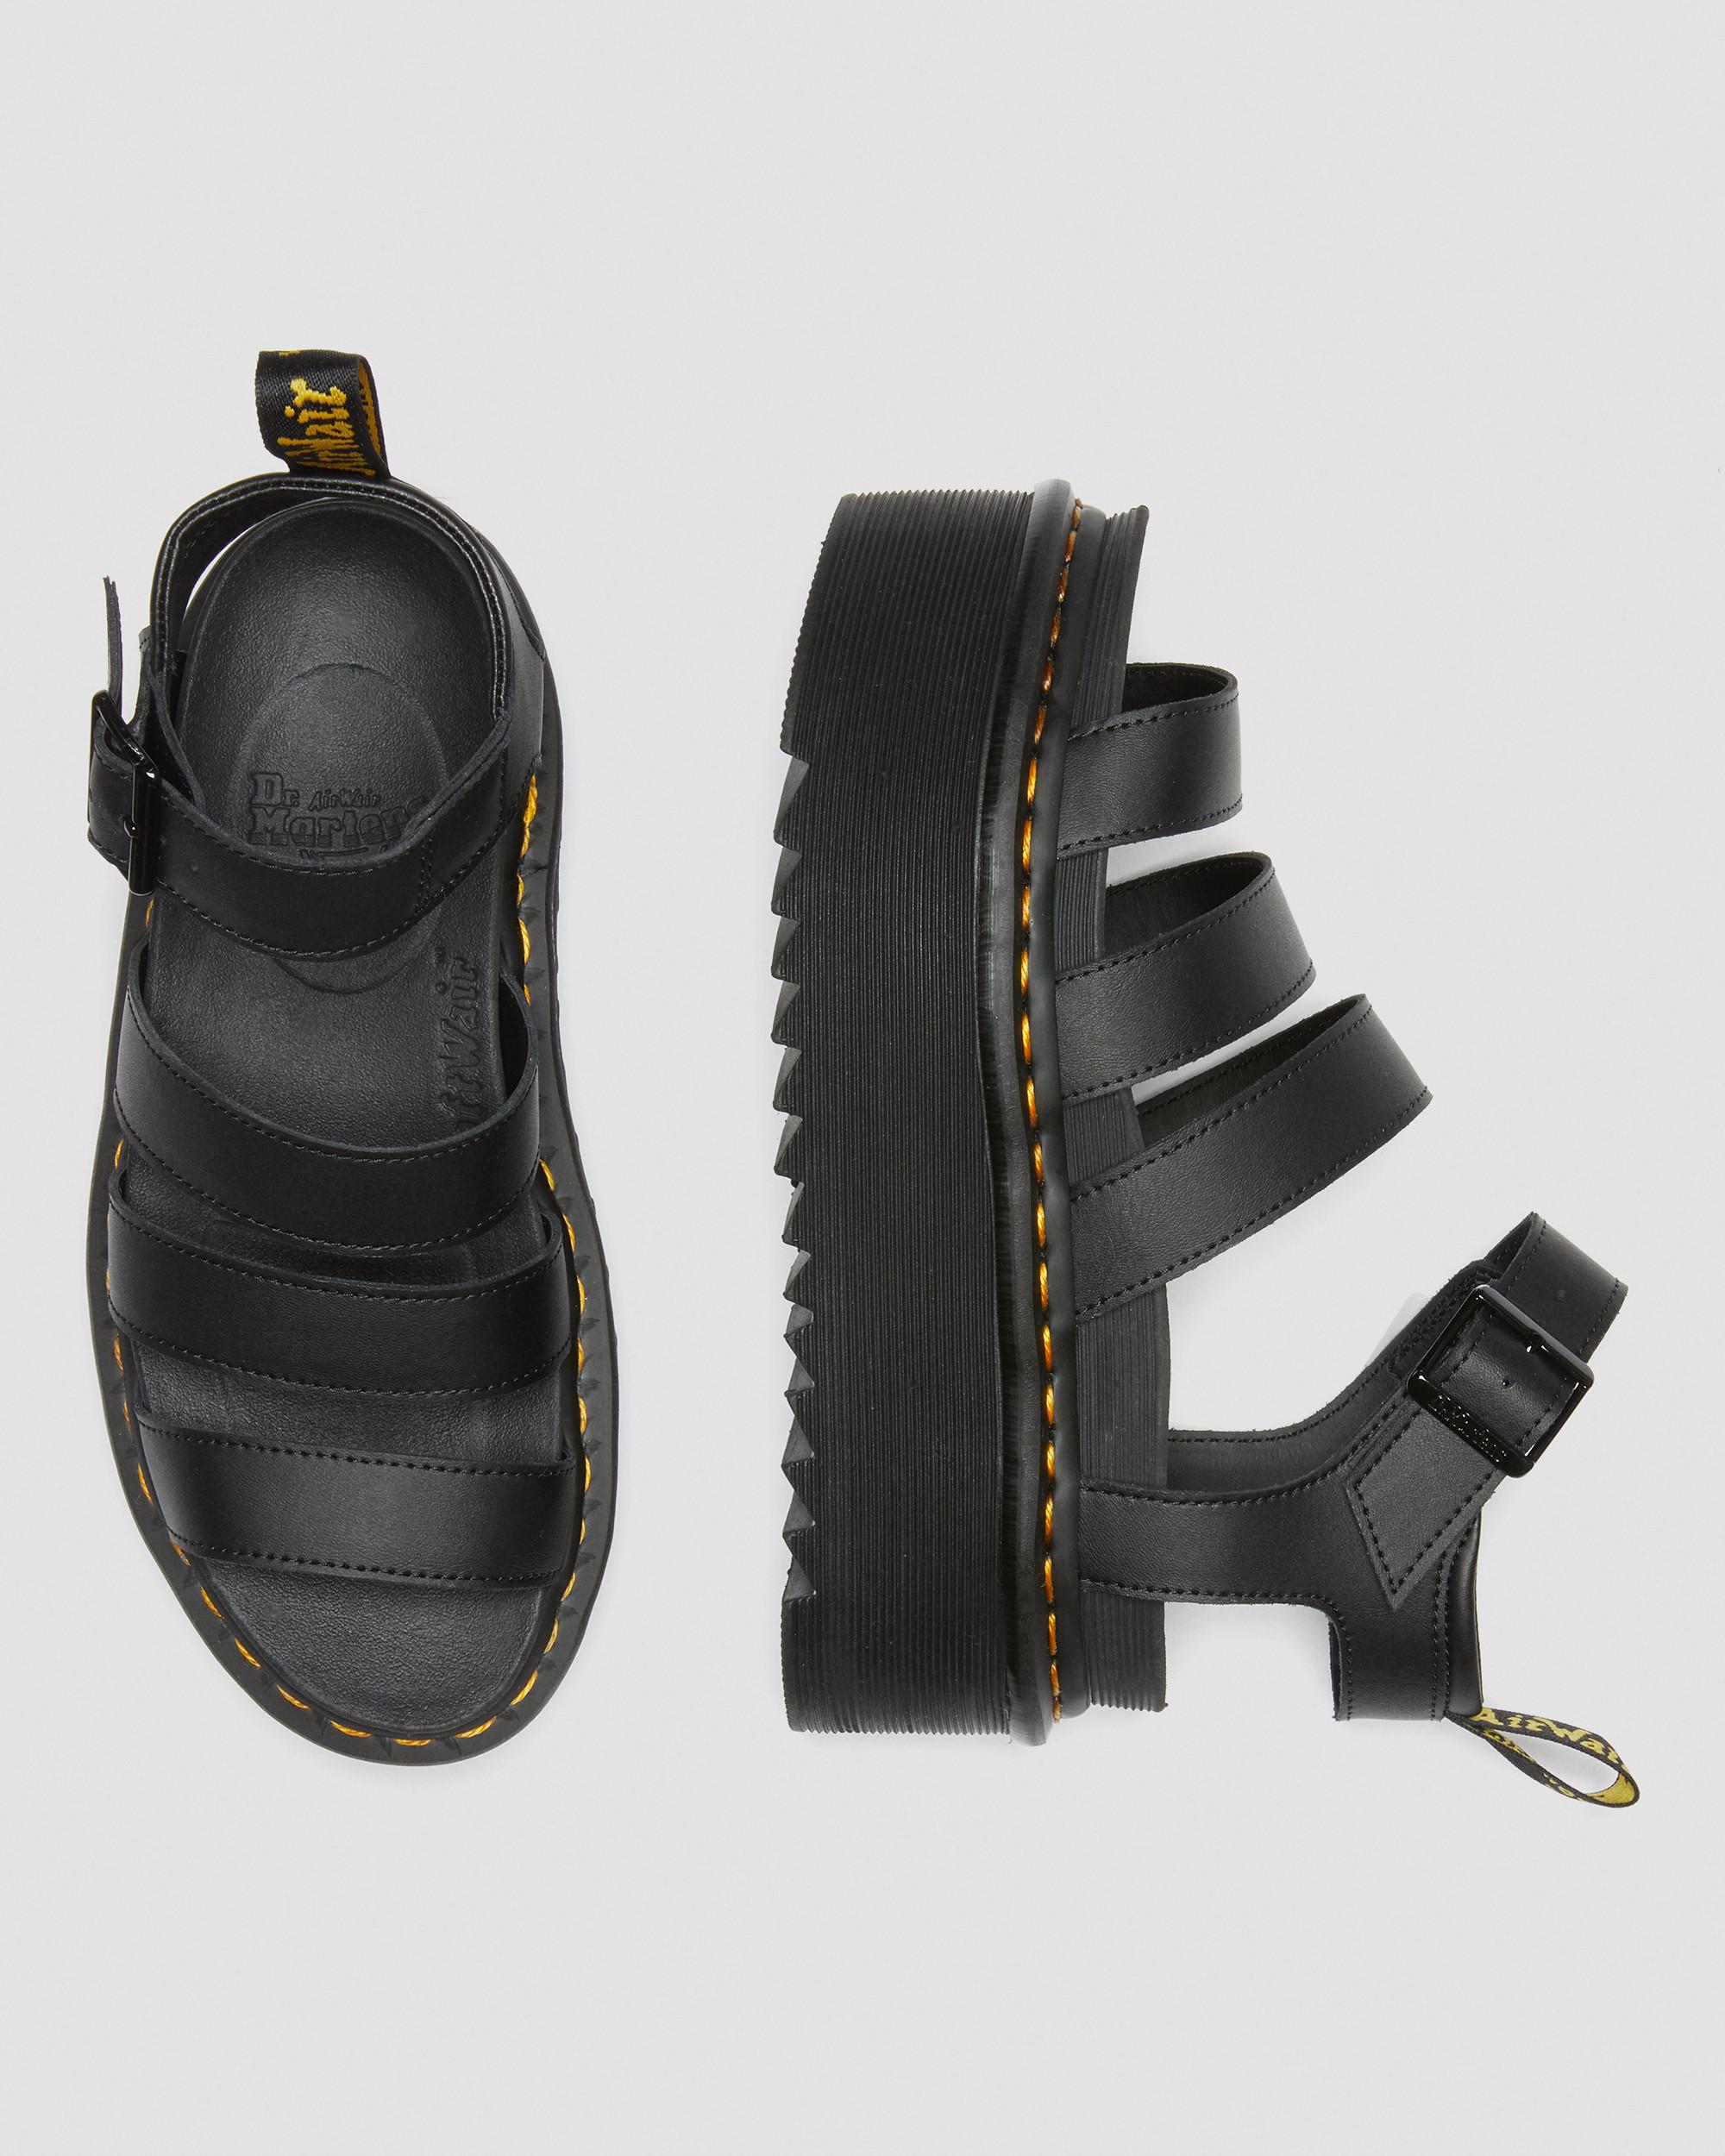 Blaire Hydro Leather Platform Strap Sandals in Black